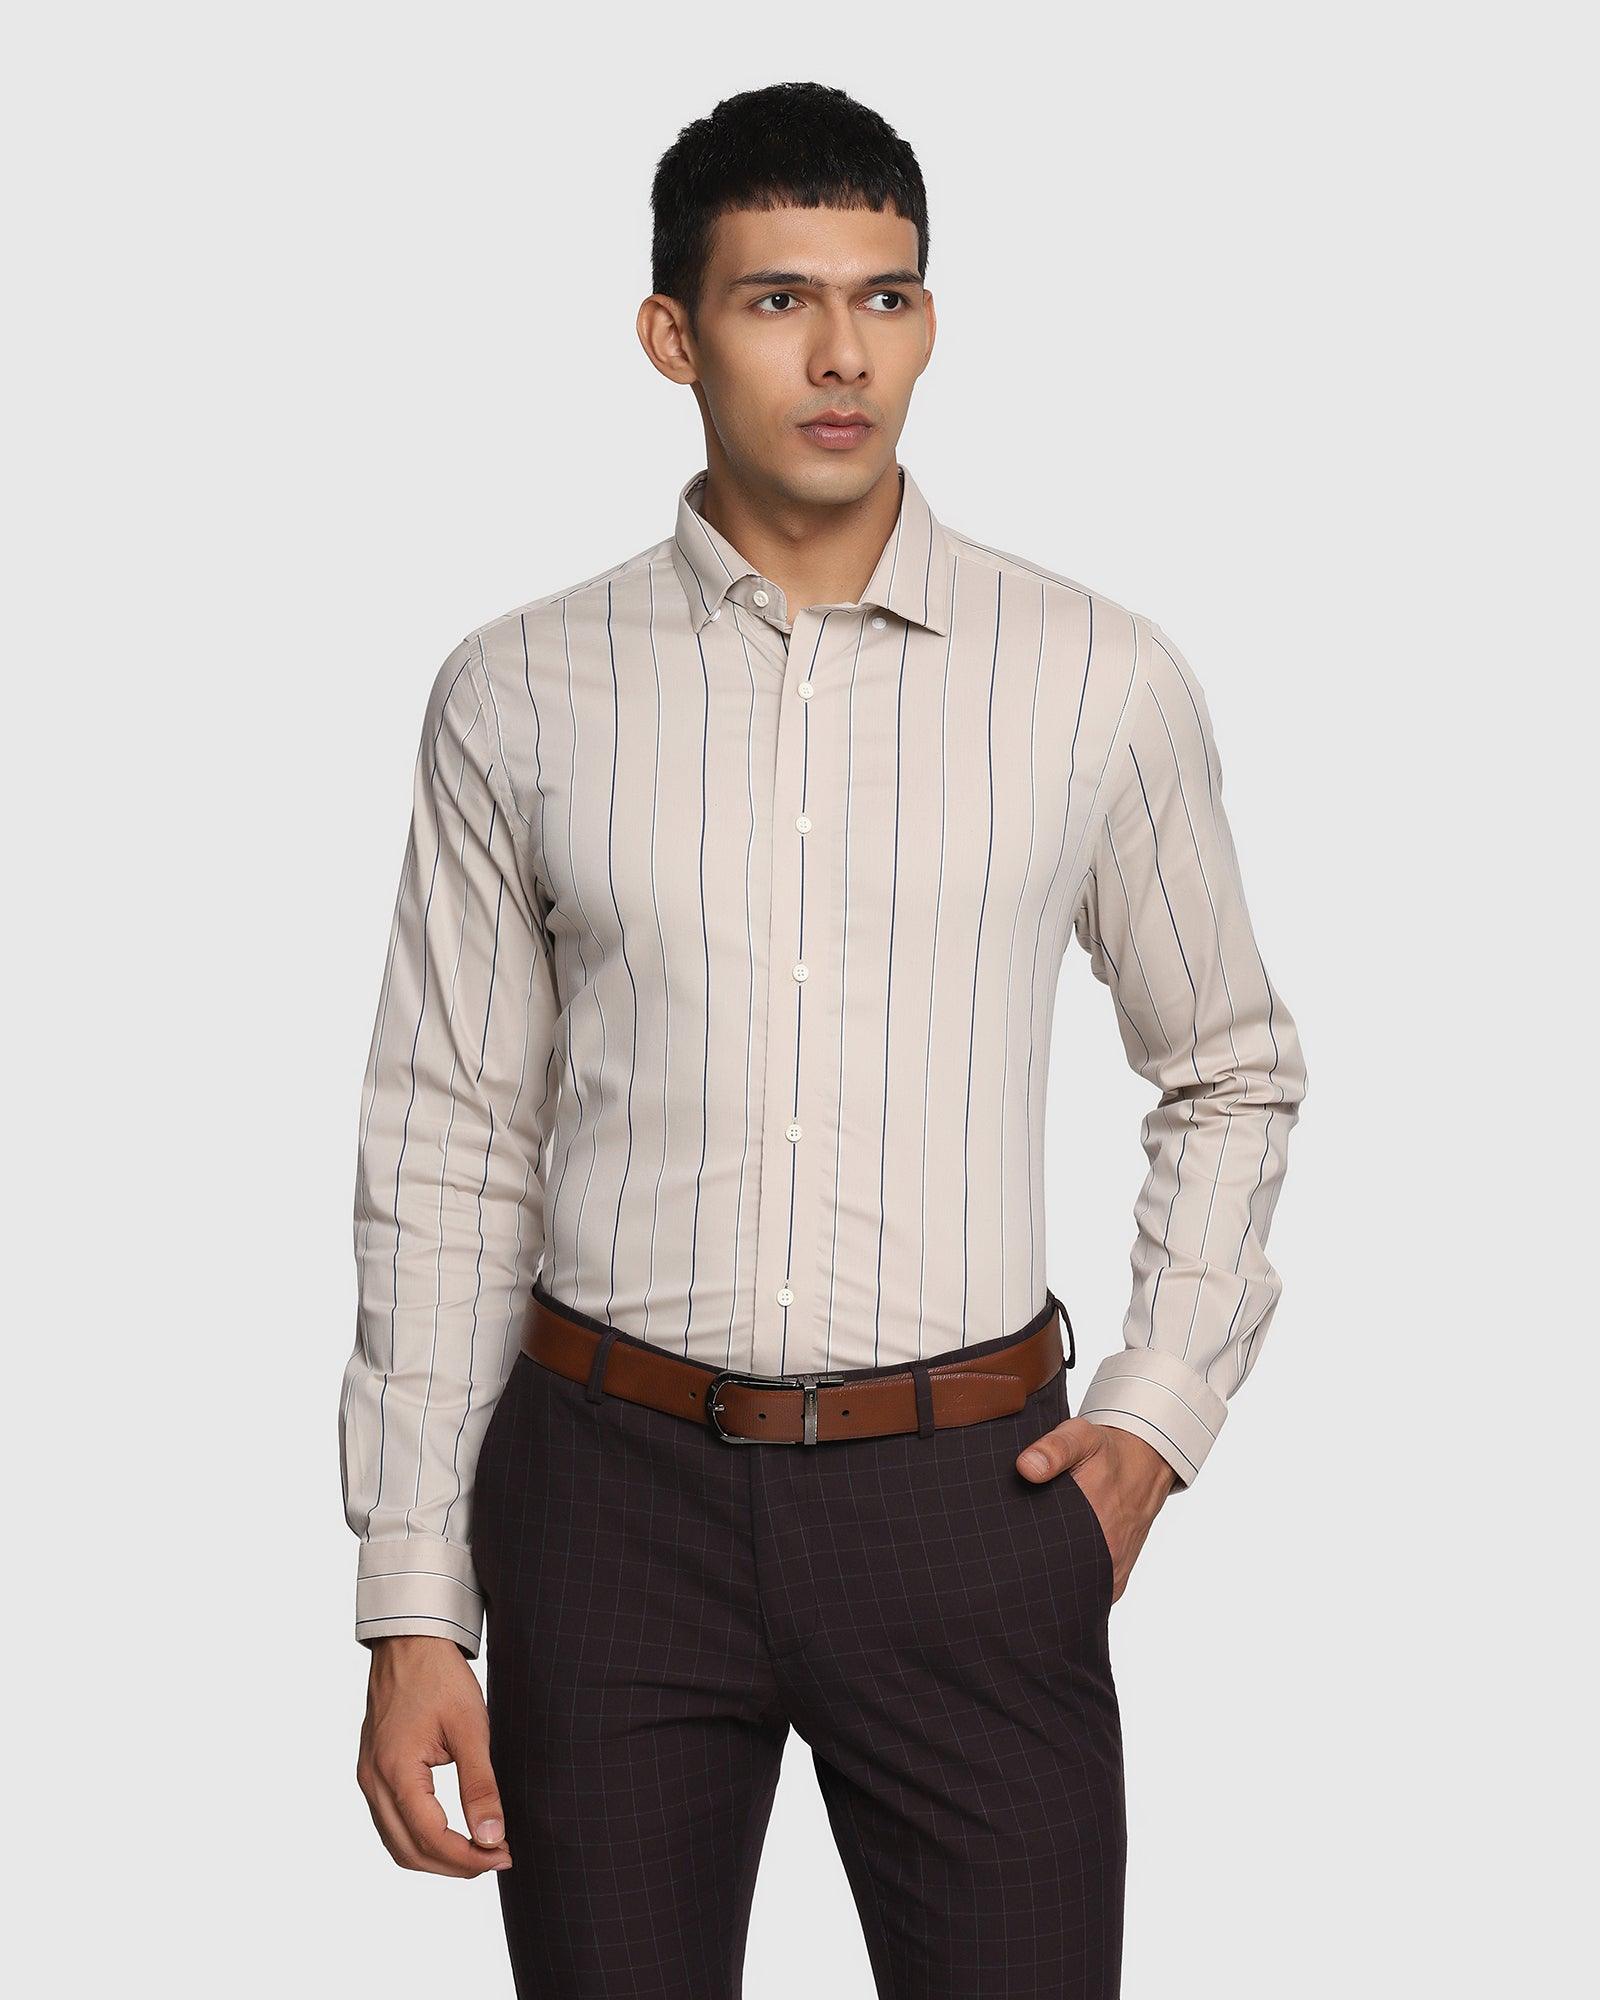 TechPro Formal Beige Striped Shirt - Carson